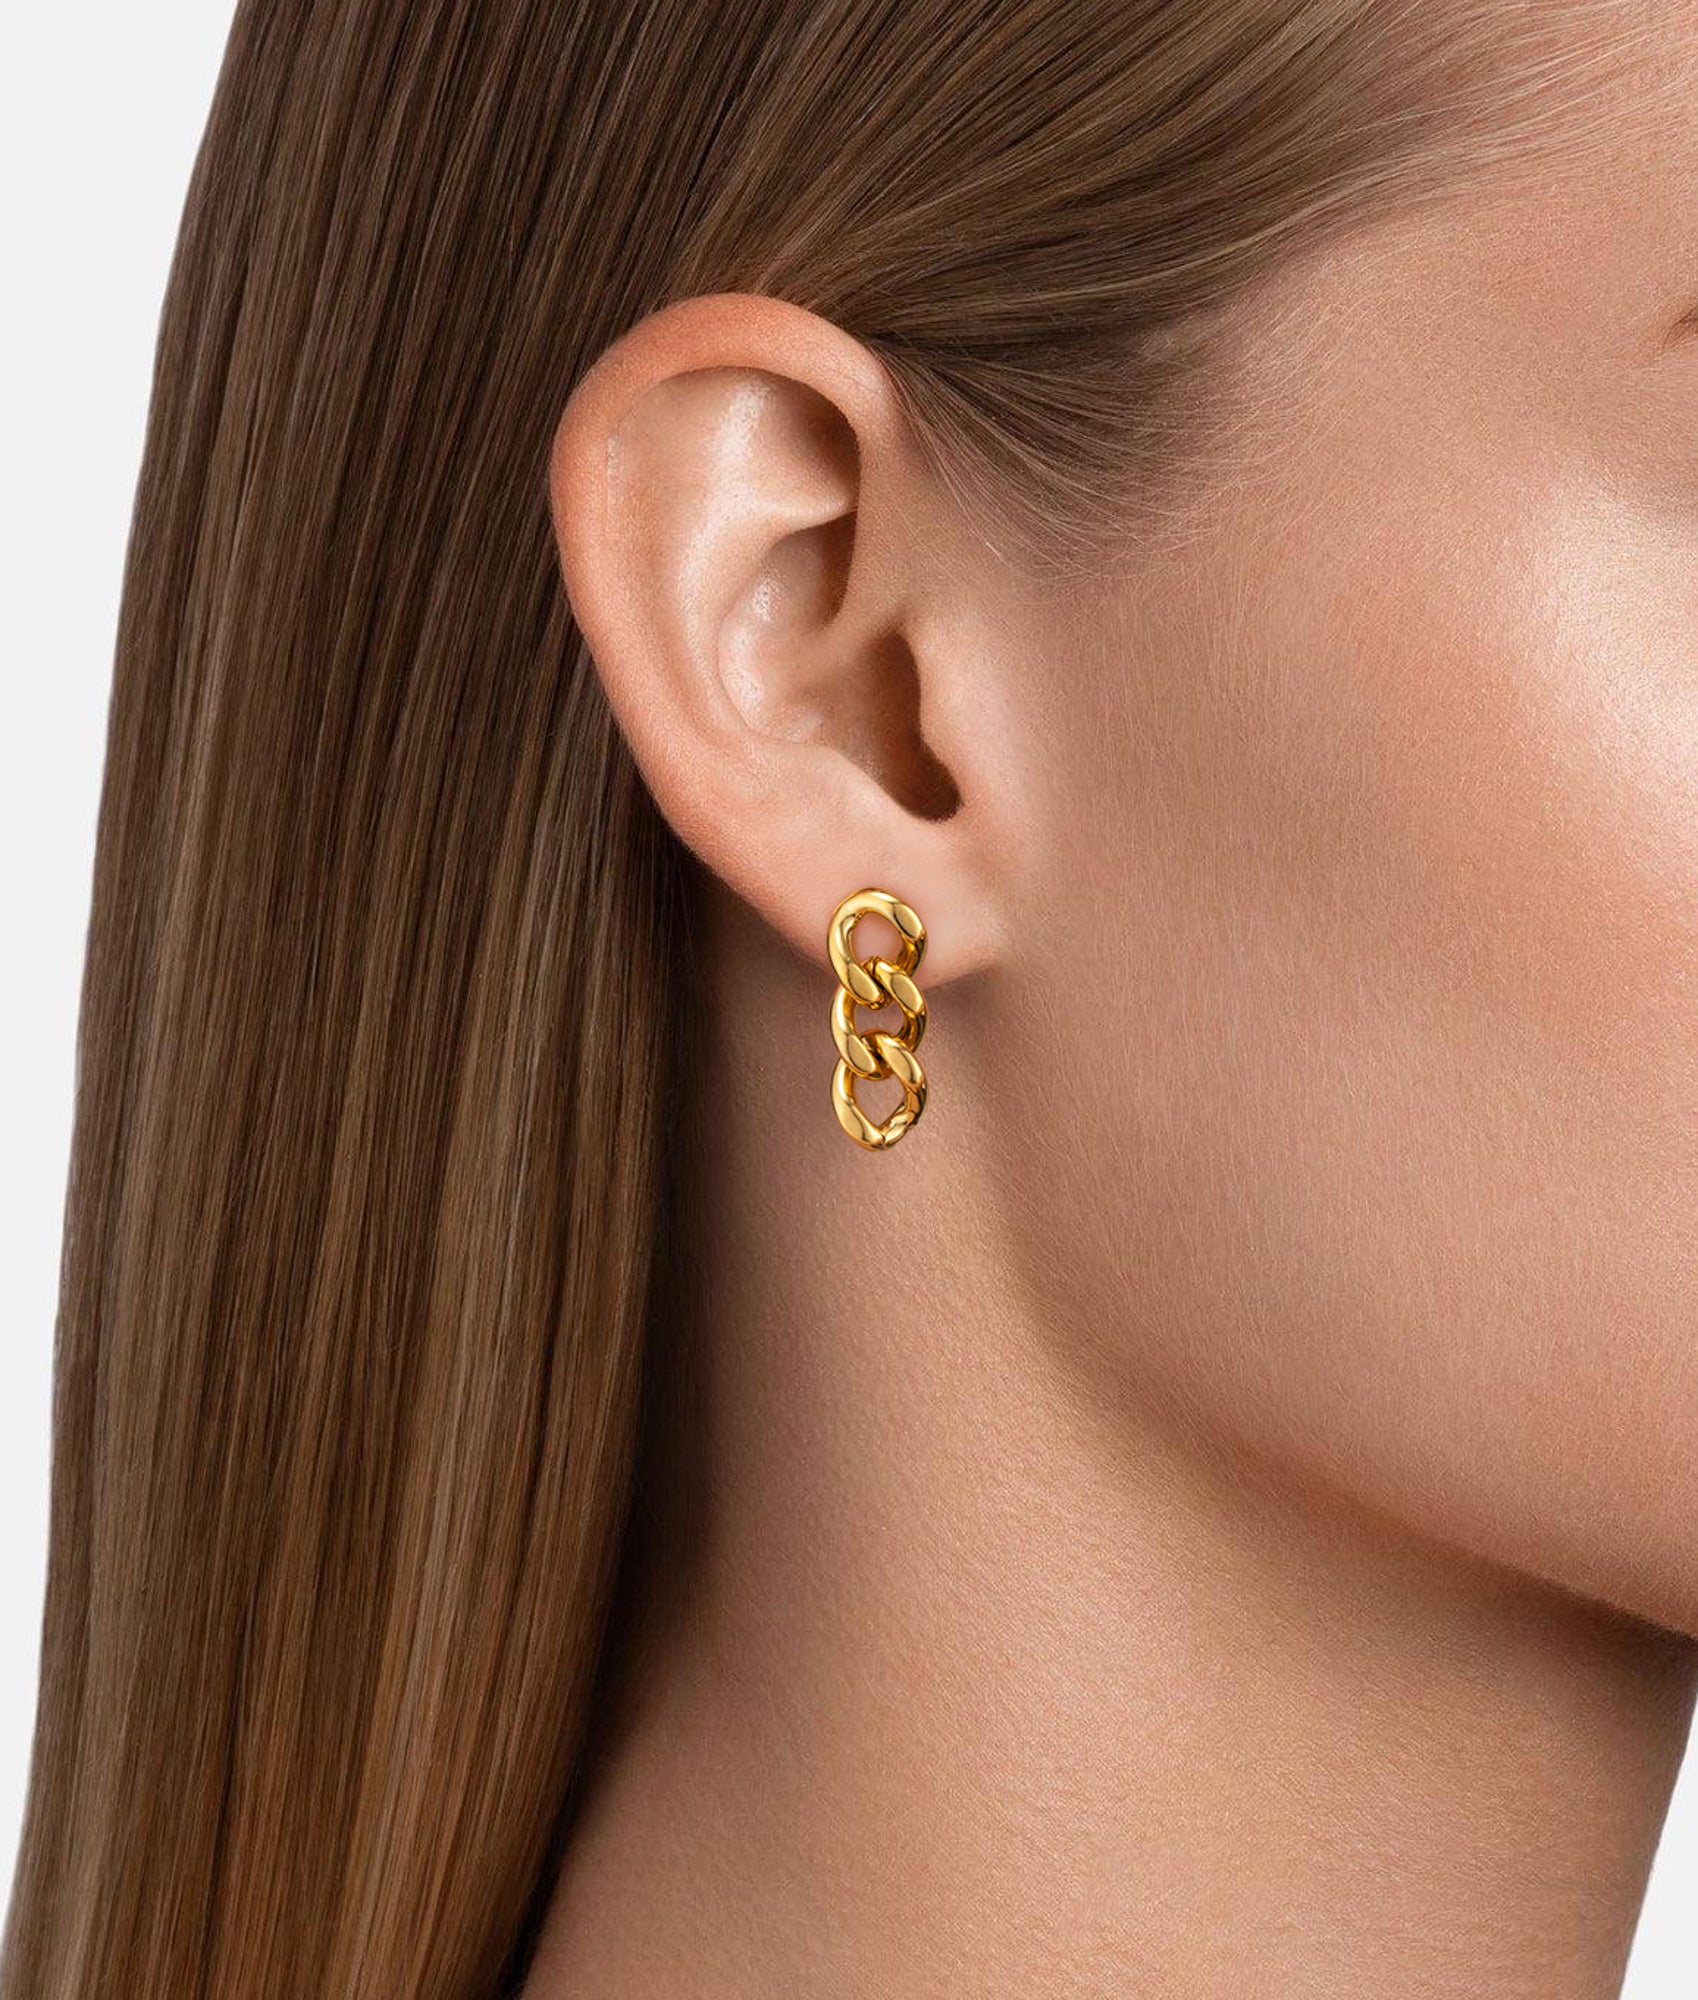 Gold Link Earrings On Model